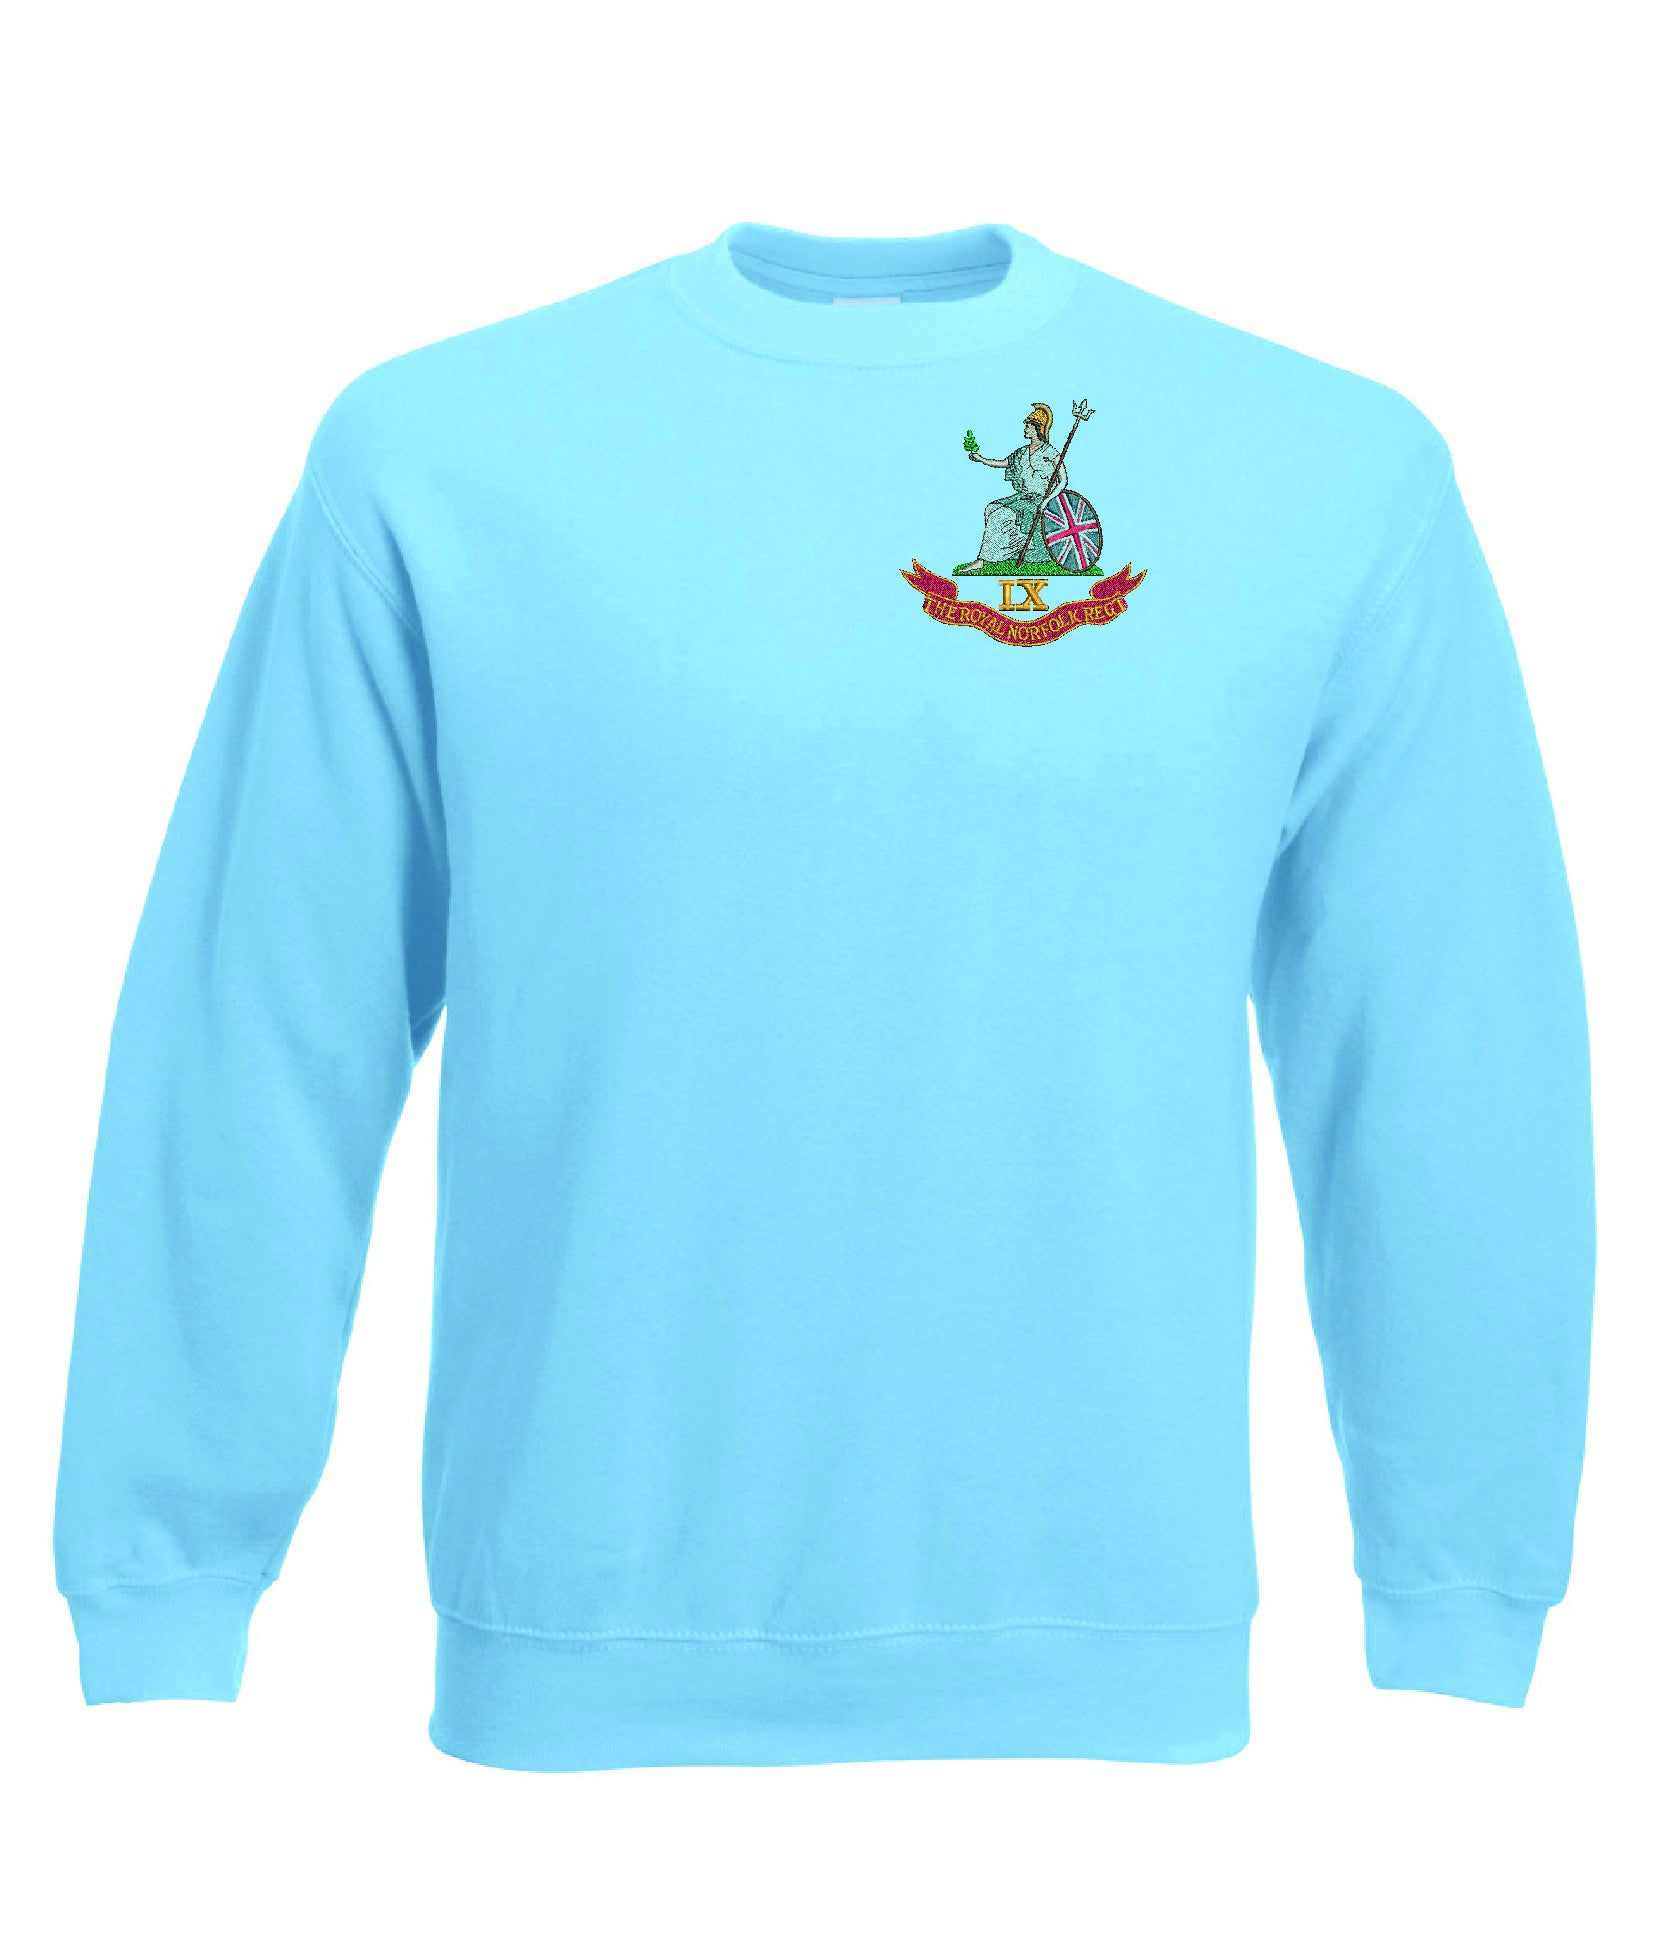 Norfolk Regiment Sweatshirt